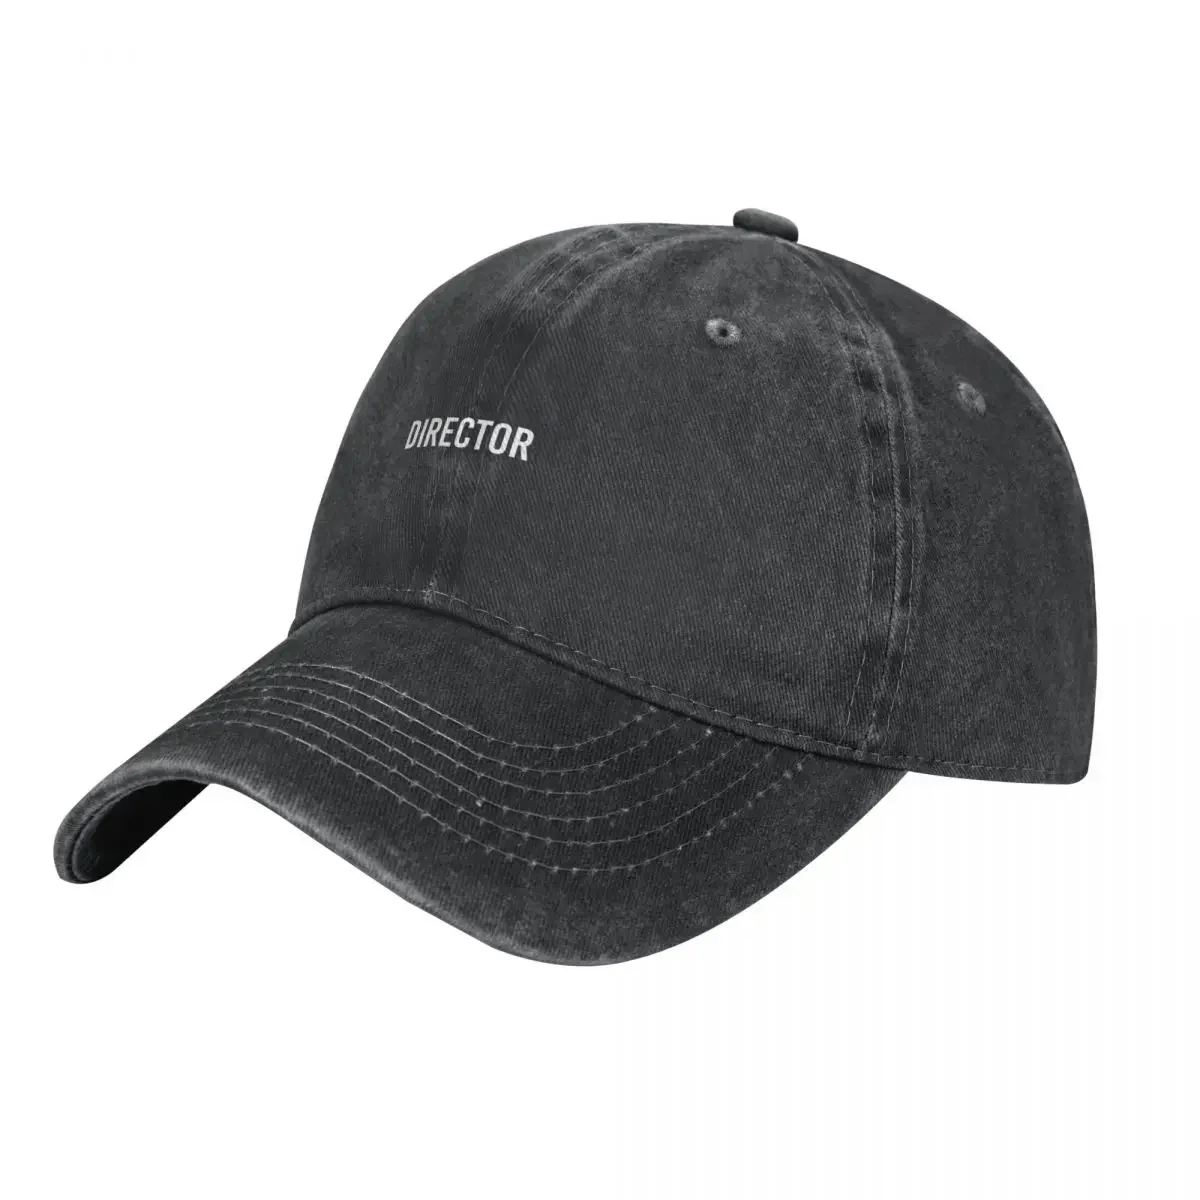 

DIRECTOR Cowboy Hat Designer Hat New In Hat Dad Hats Male Cap Hip Hop Summer Baseball Caps for Men Women